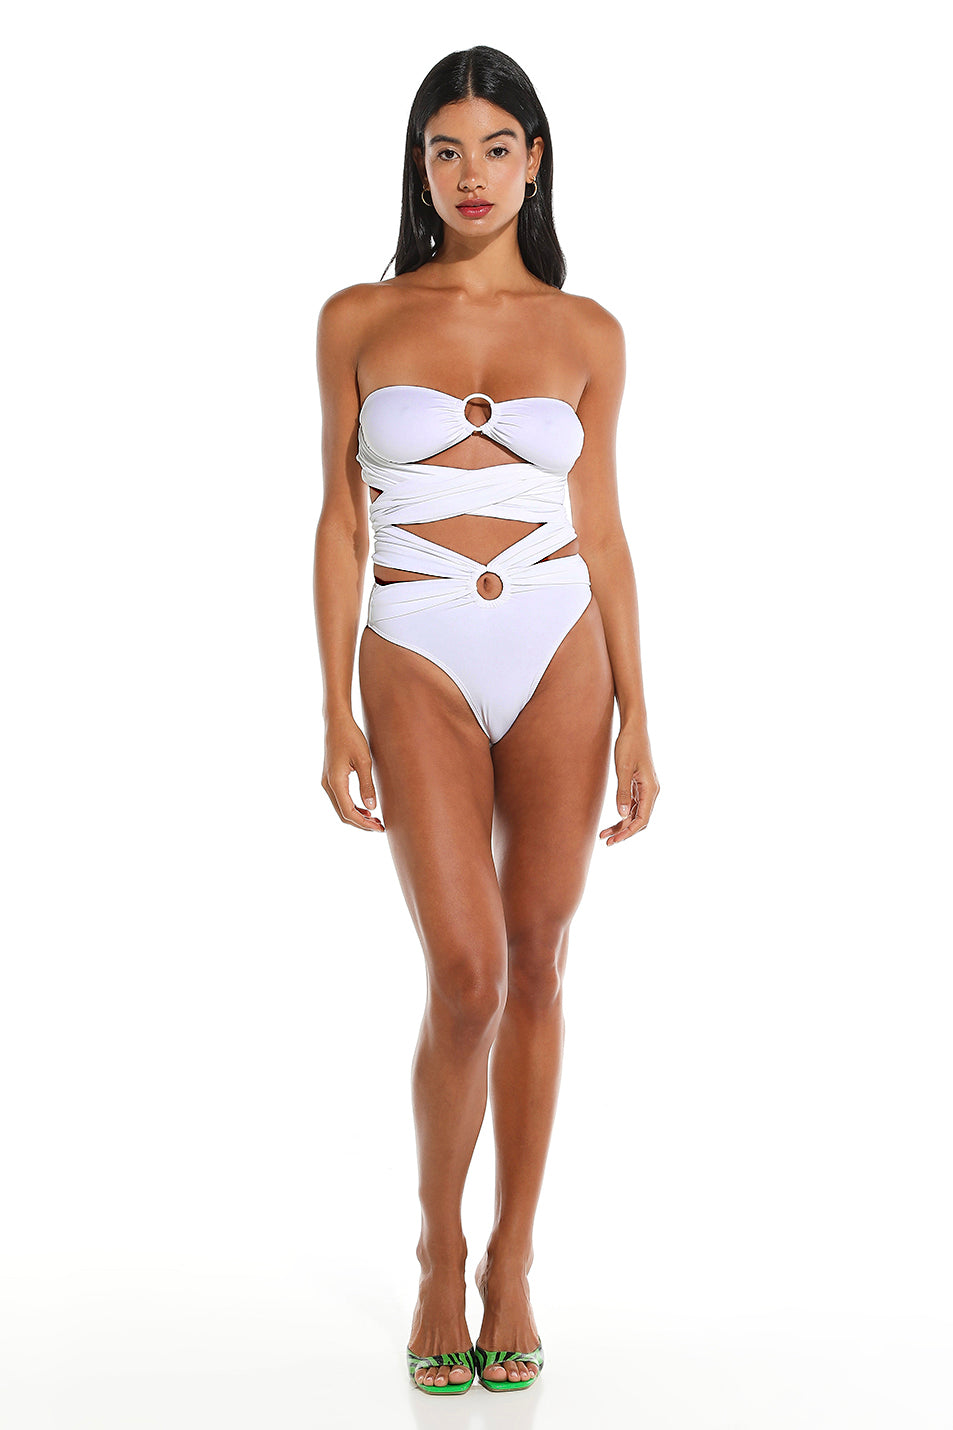 Toghzan bikini top - White